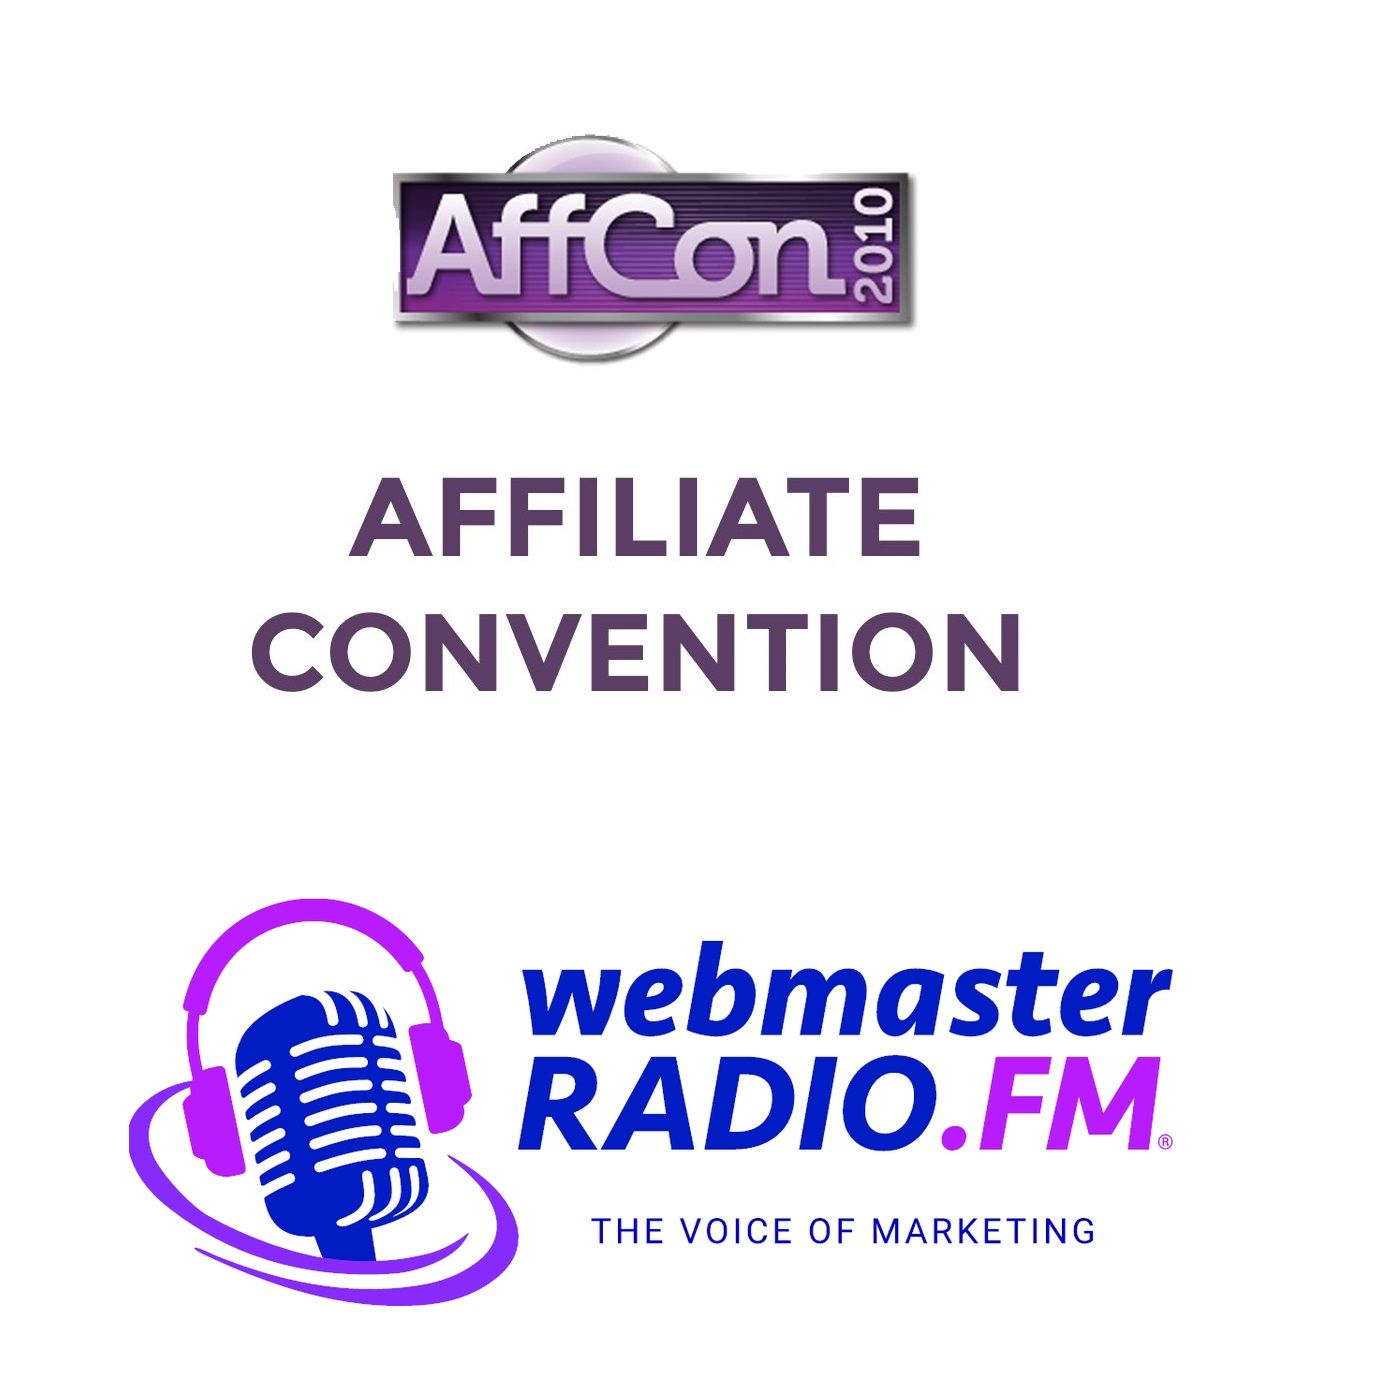 WebmasterRadio.FM Listener Makes AffCon 2010 Trip from Dublin, Ireland